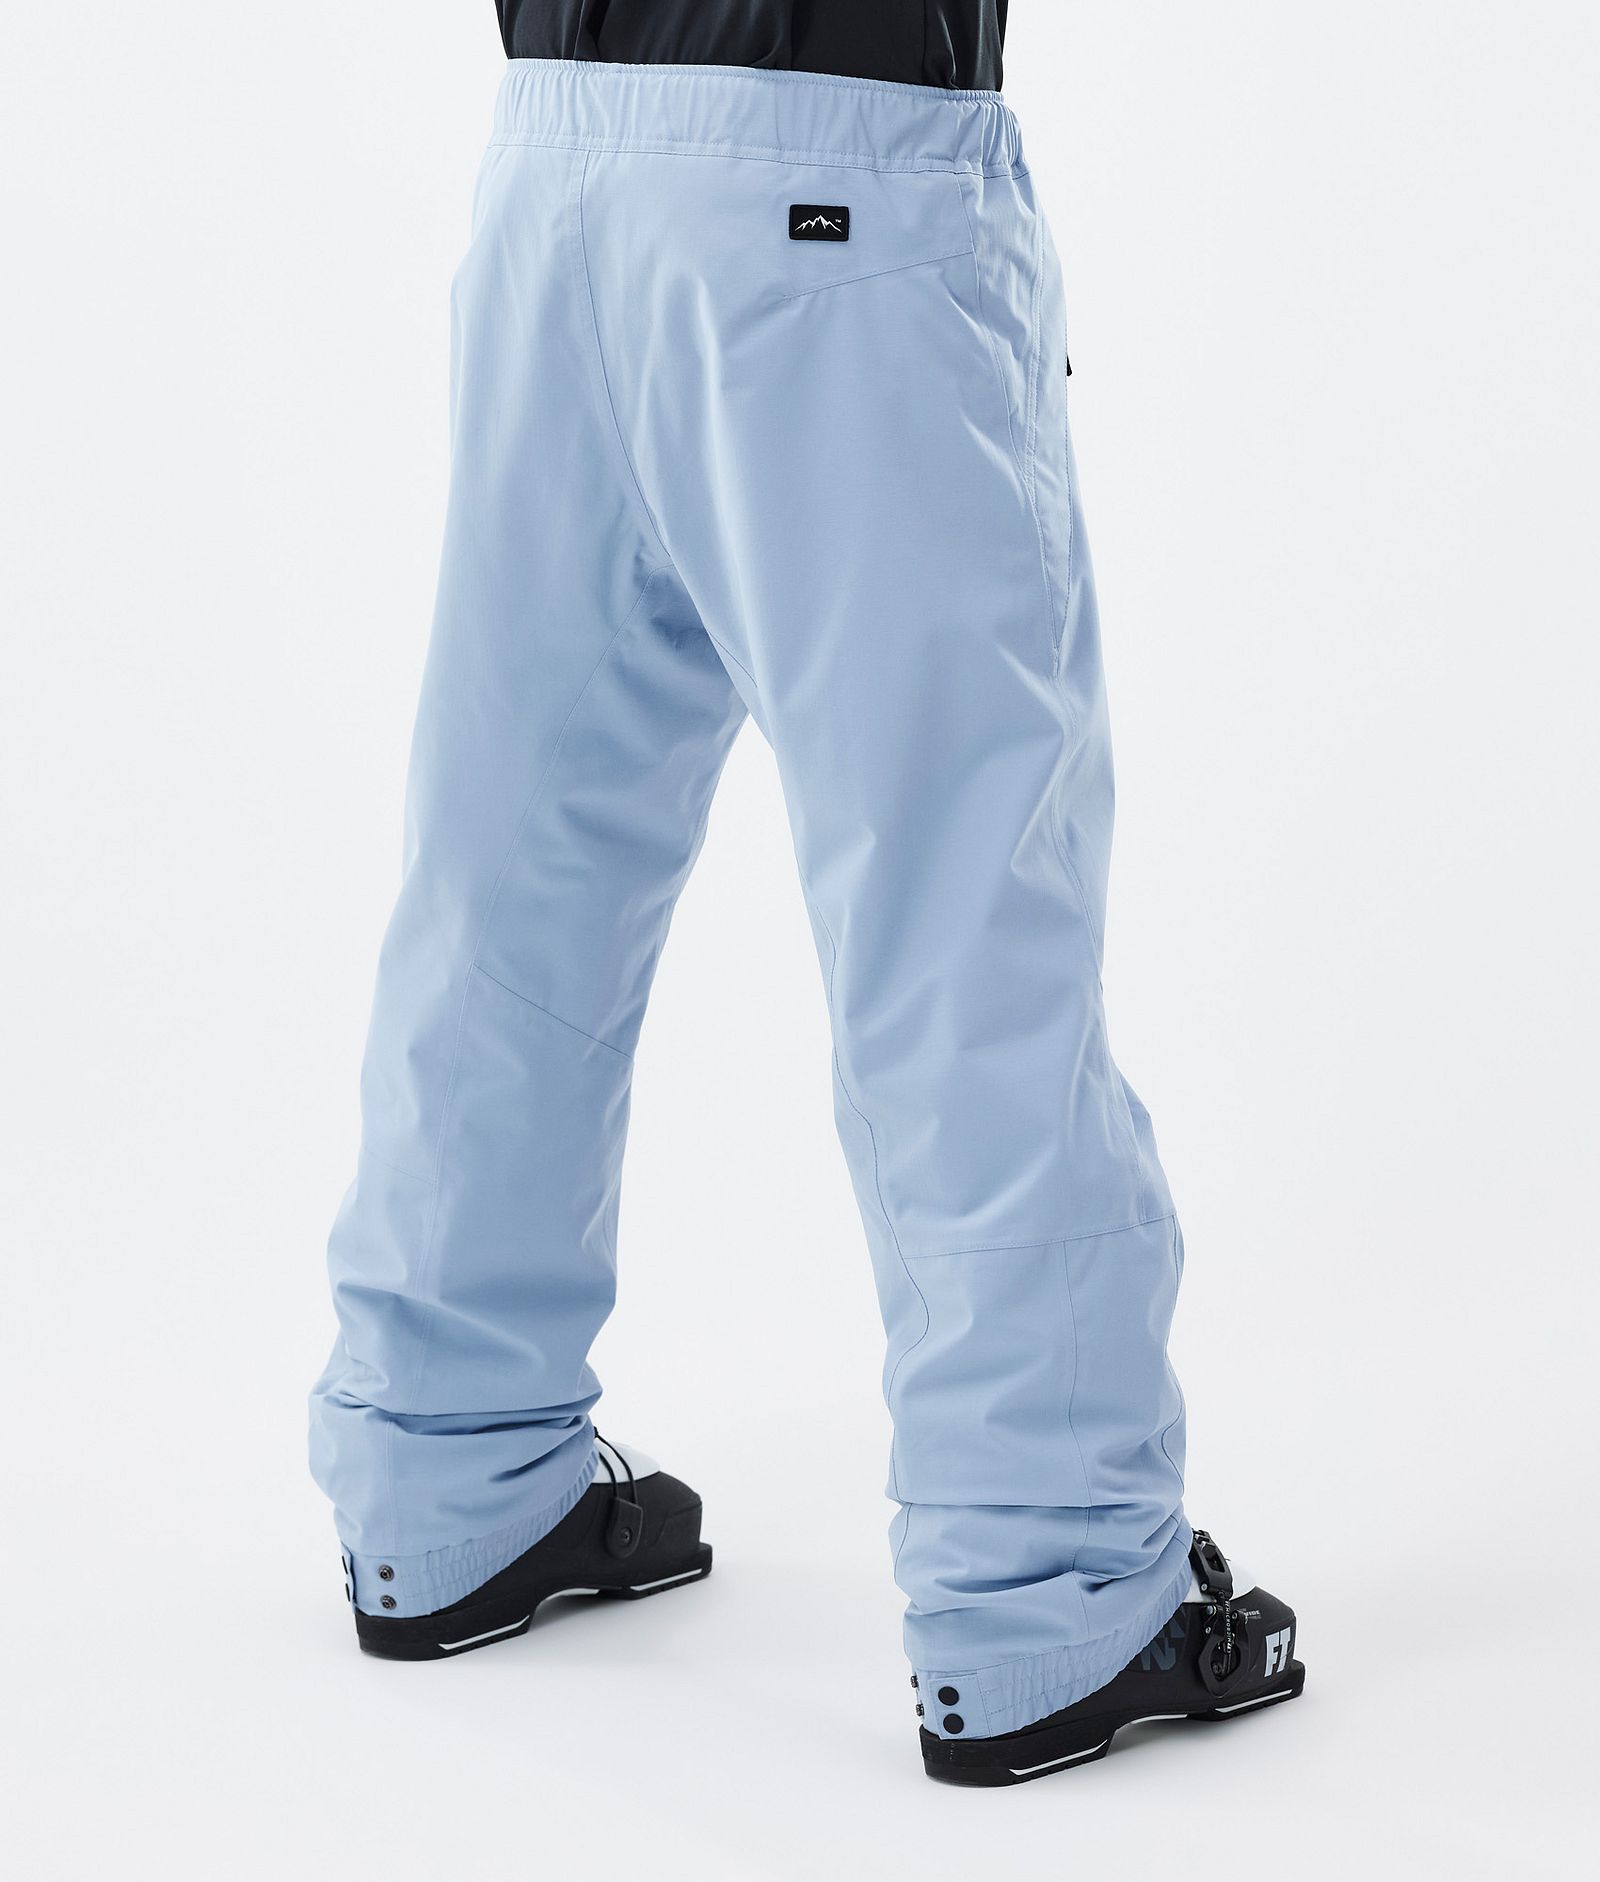 Dope Blizzard Pantaloni Sci Uomo Light Blue